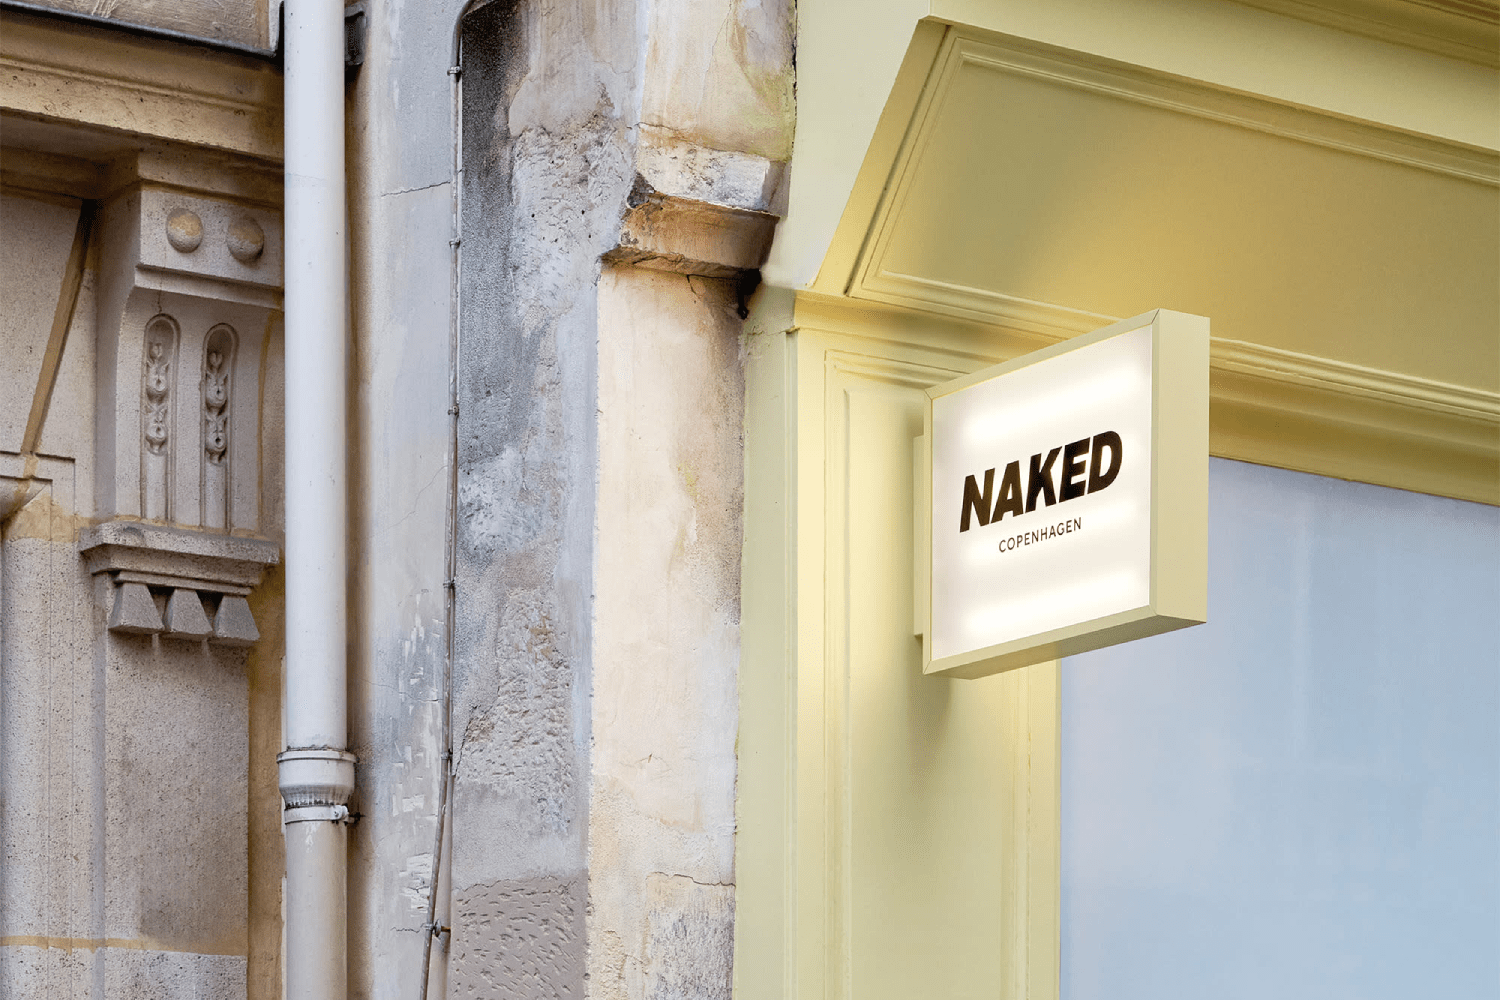 NAKED Copenhagen opens a new shop in Paris